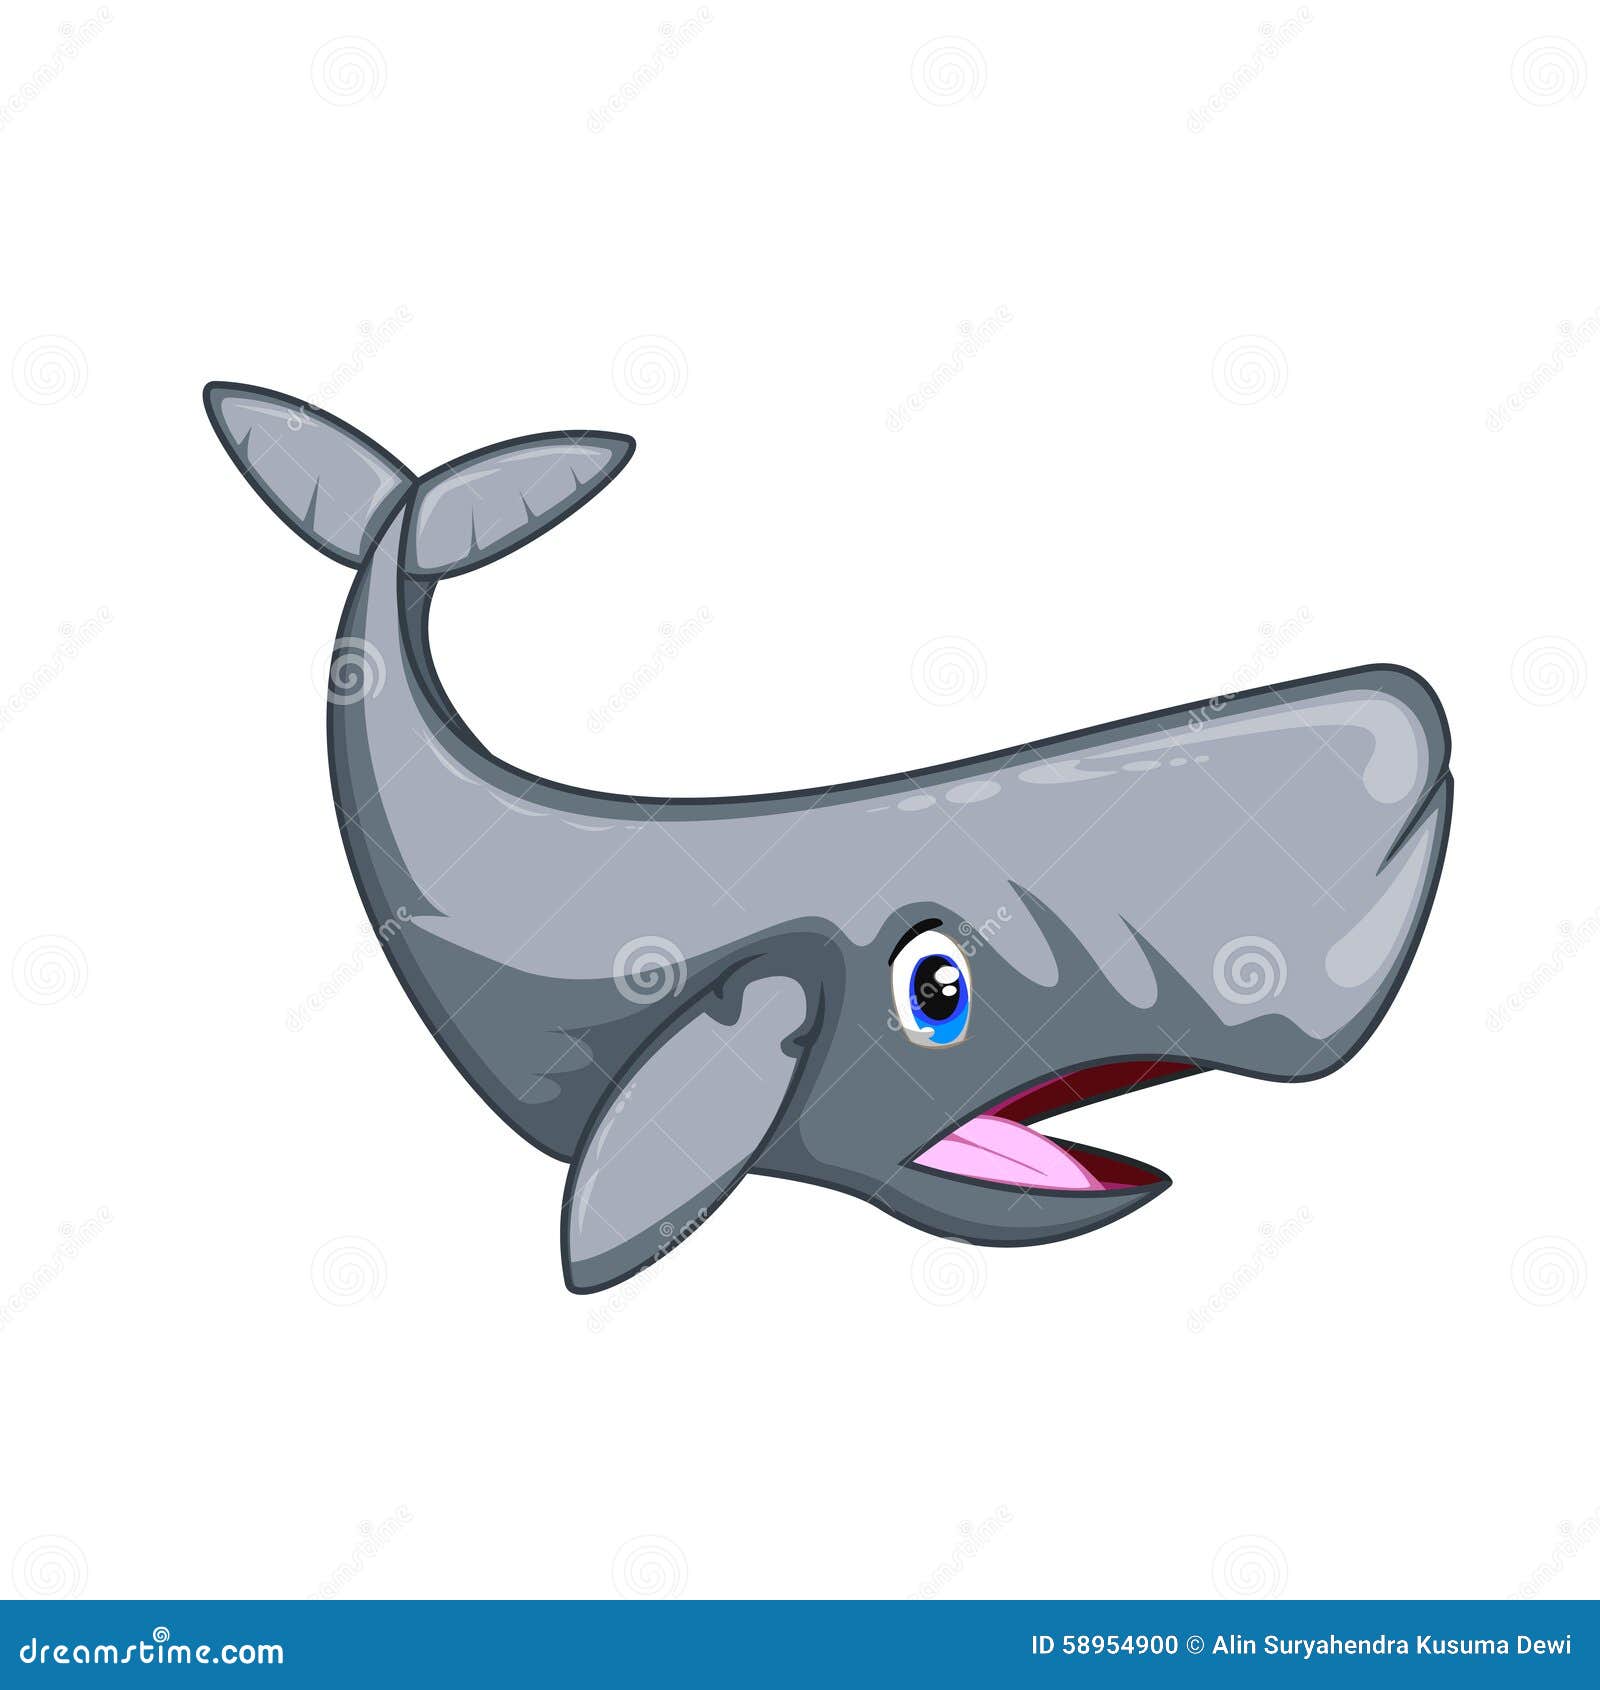 Sperm Whale Cartoon Illustration 58954900 - Megapixl